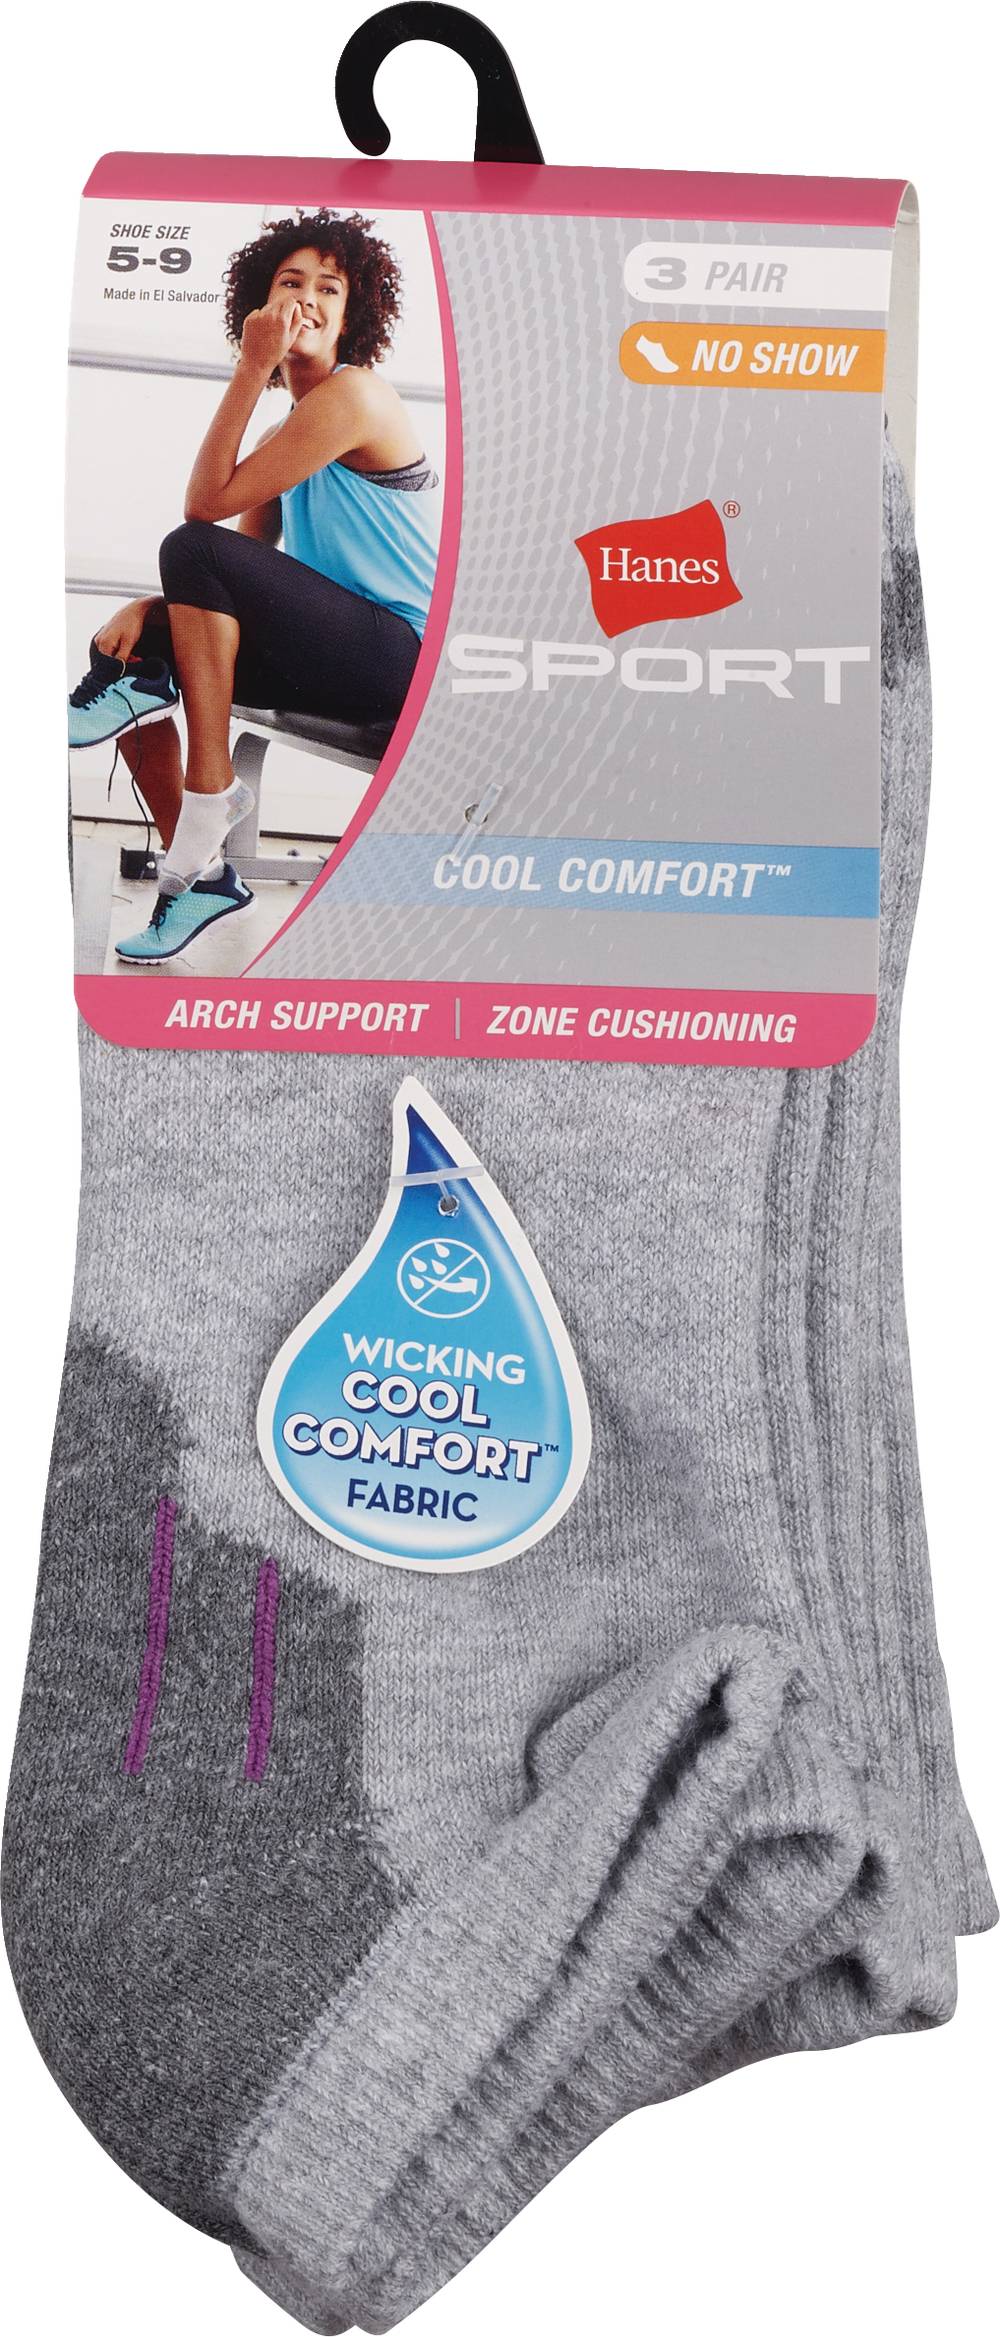 Hanes Sport Women's Cool Comfort No Show Socks, Size 5-9, 3 ct